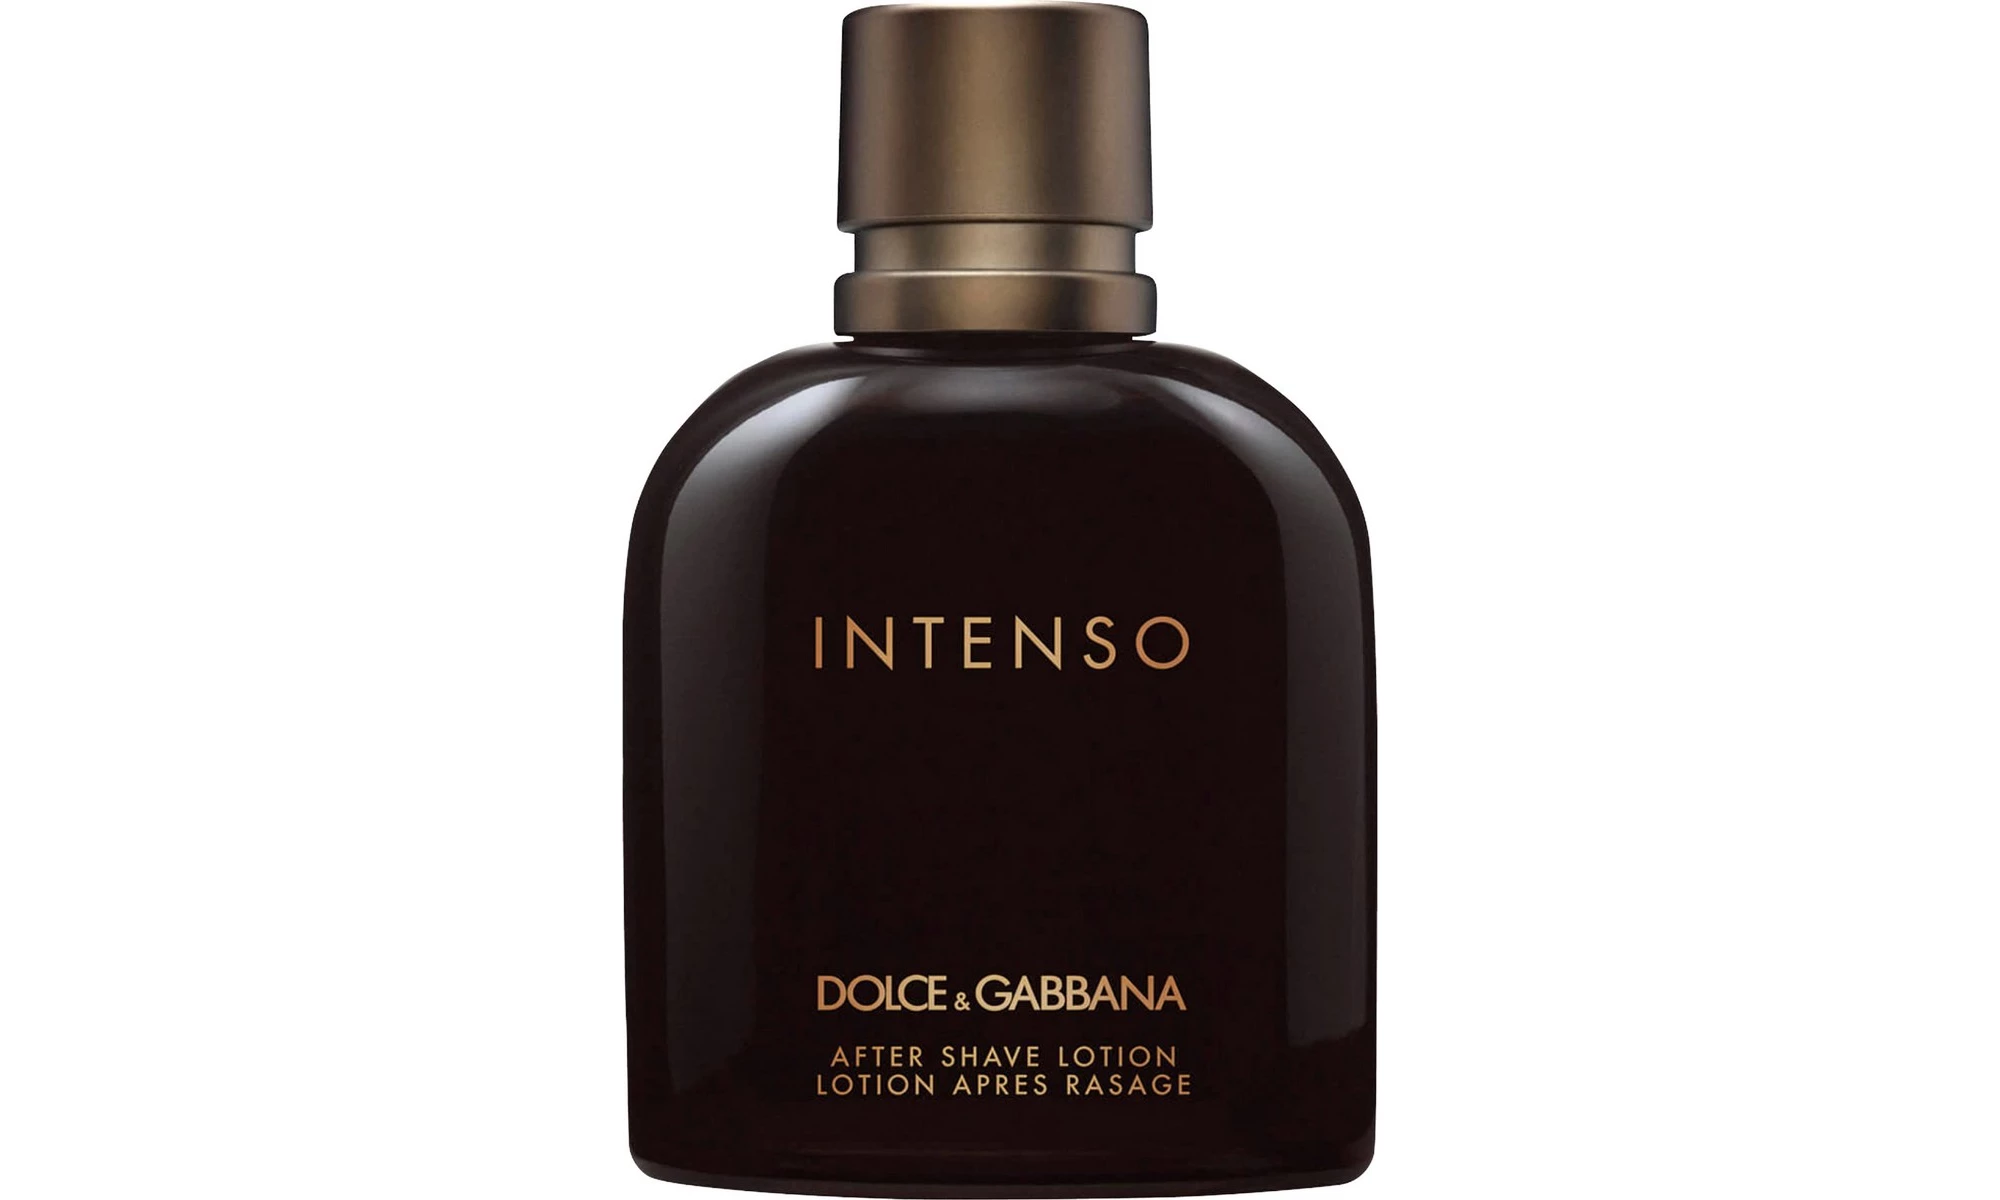 Дольче габбана хоме. Дольче Габбана intenso. Dolce&Gabbana intenso парфюмерная вода 125 мл. Dolce Gabbana pour homme 75 мл. Парфюмерная вода Dolce & Gabbana "intenso pour homme".